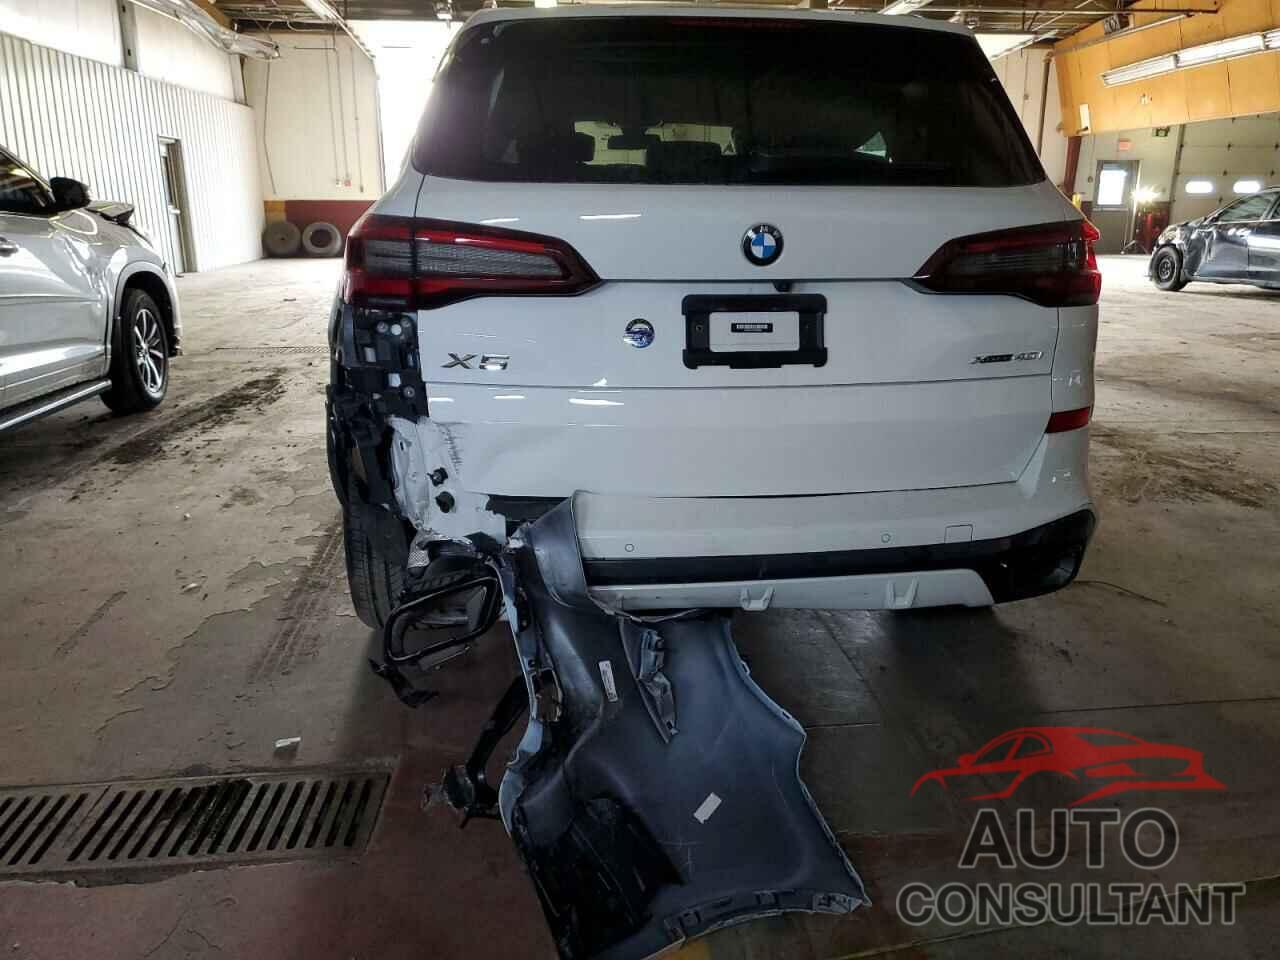 BMW X5 2023 - 5UXCR6C04P9P99688